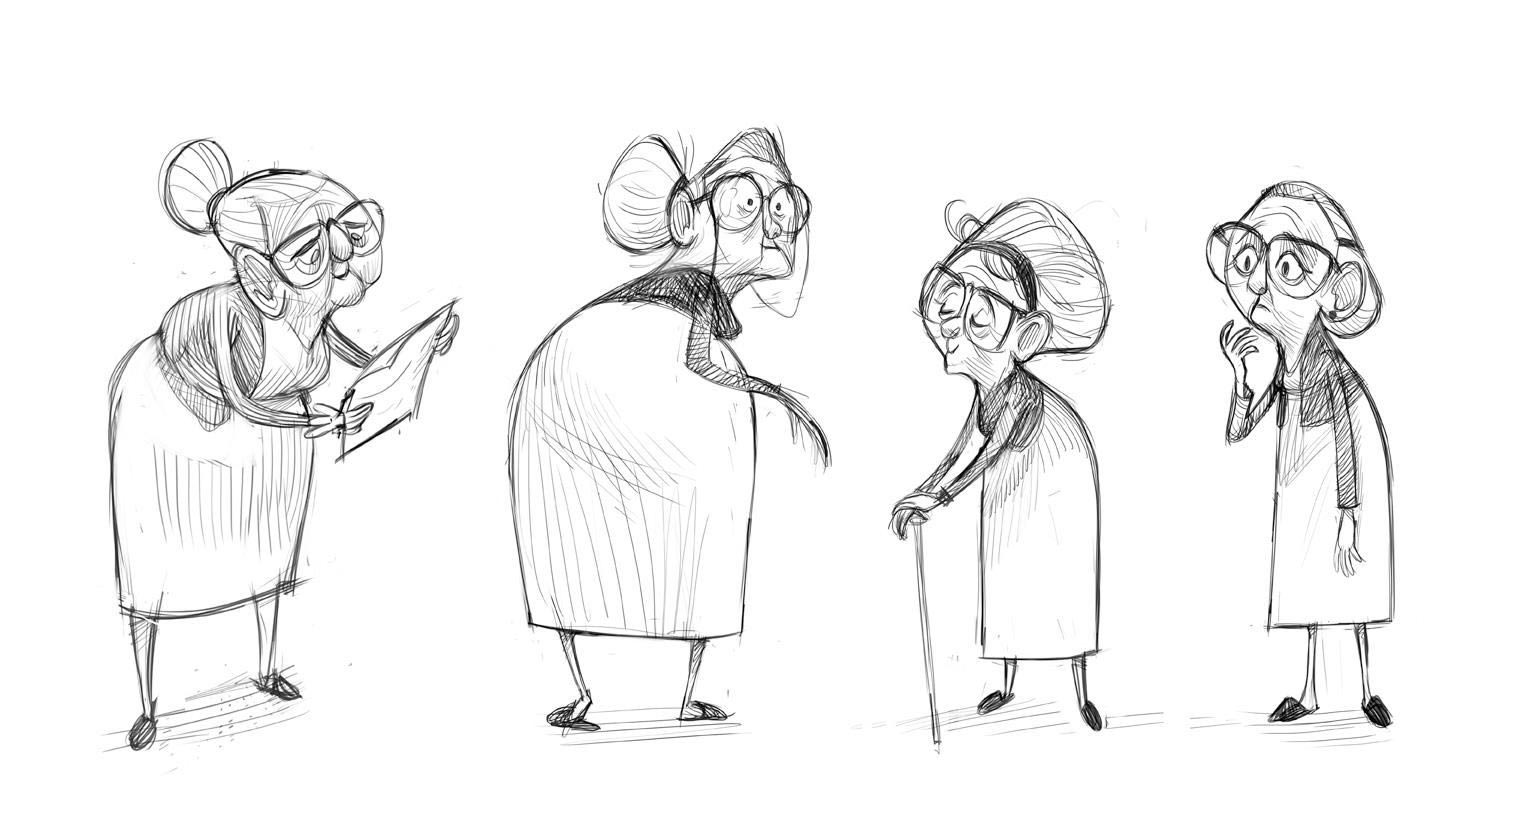 Old Lady Cartoon Character Drawing